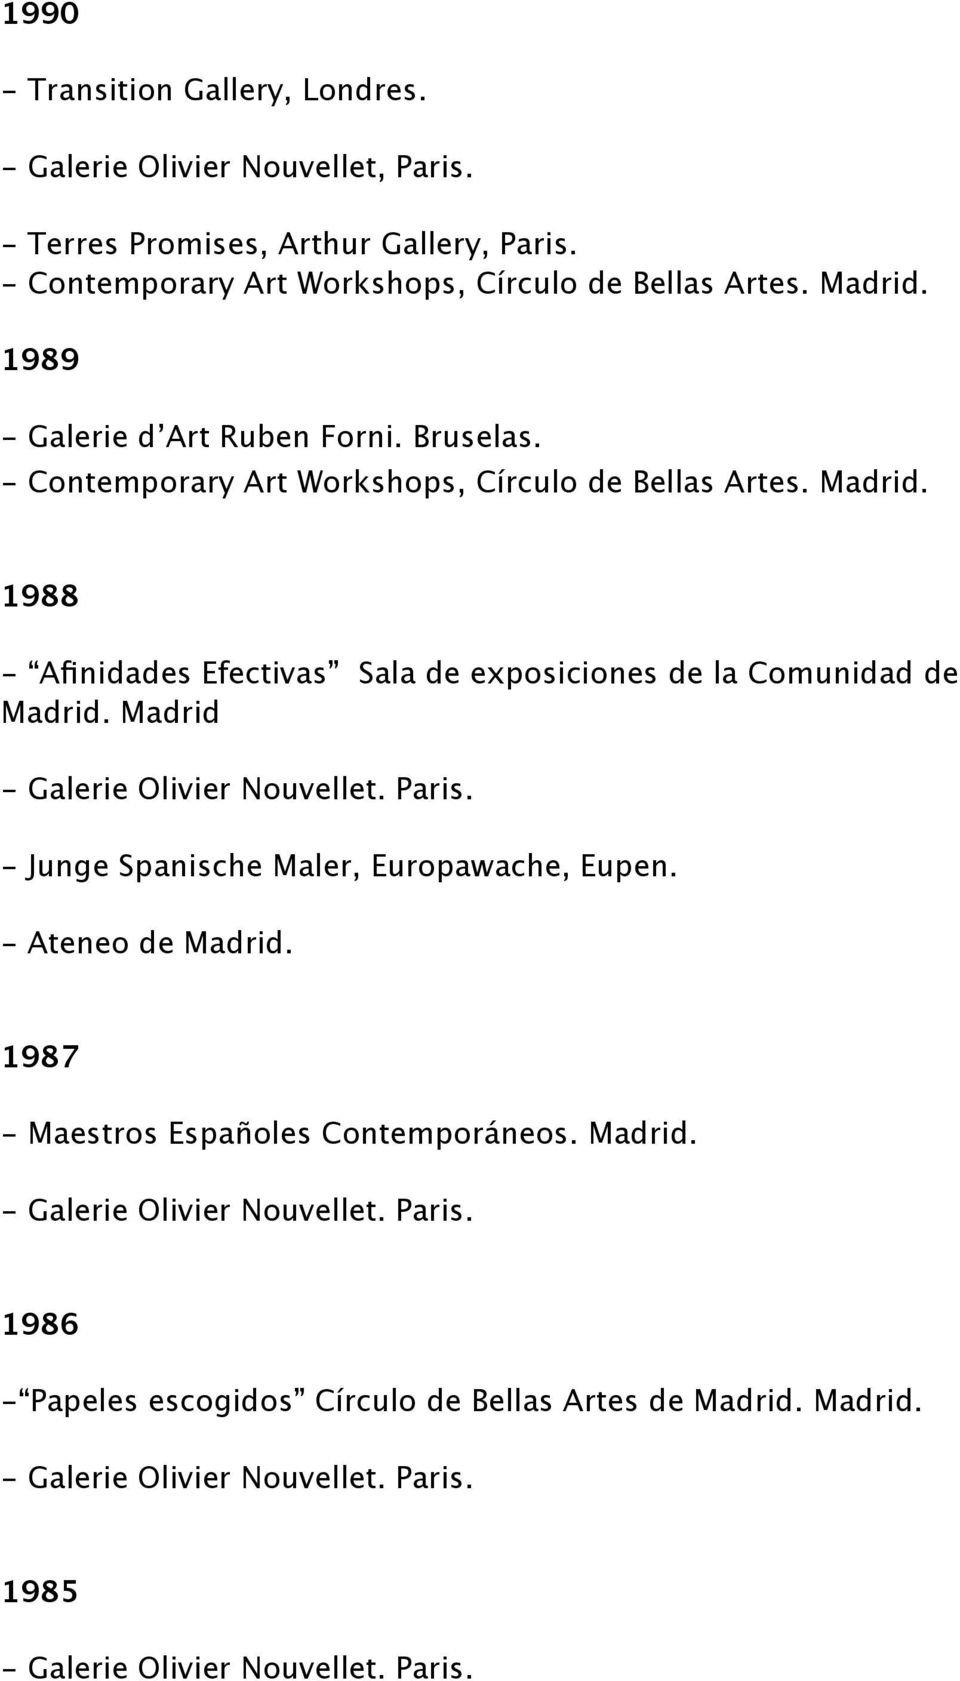 1988 - Afinidades Efectivas Sala de exposiciones de la Comunidad de Madrid. Madrid - Galerie Olivier Nouvellet. Paris. - Junge Spanische Maler, Europawache, Eupen.